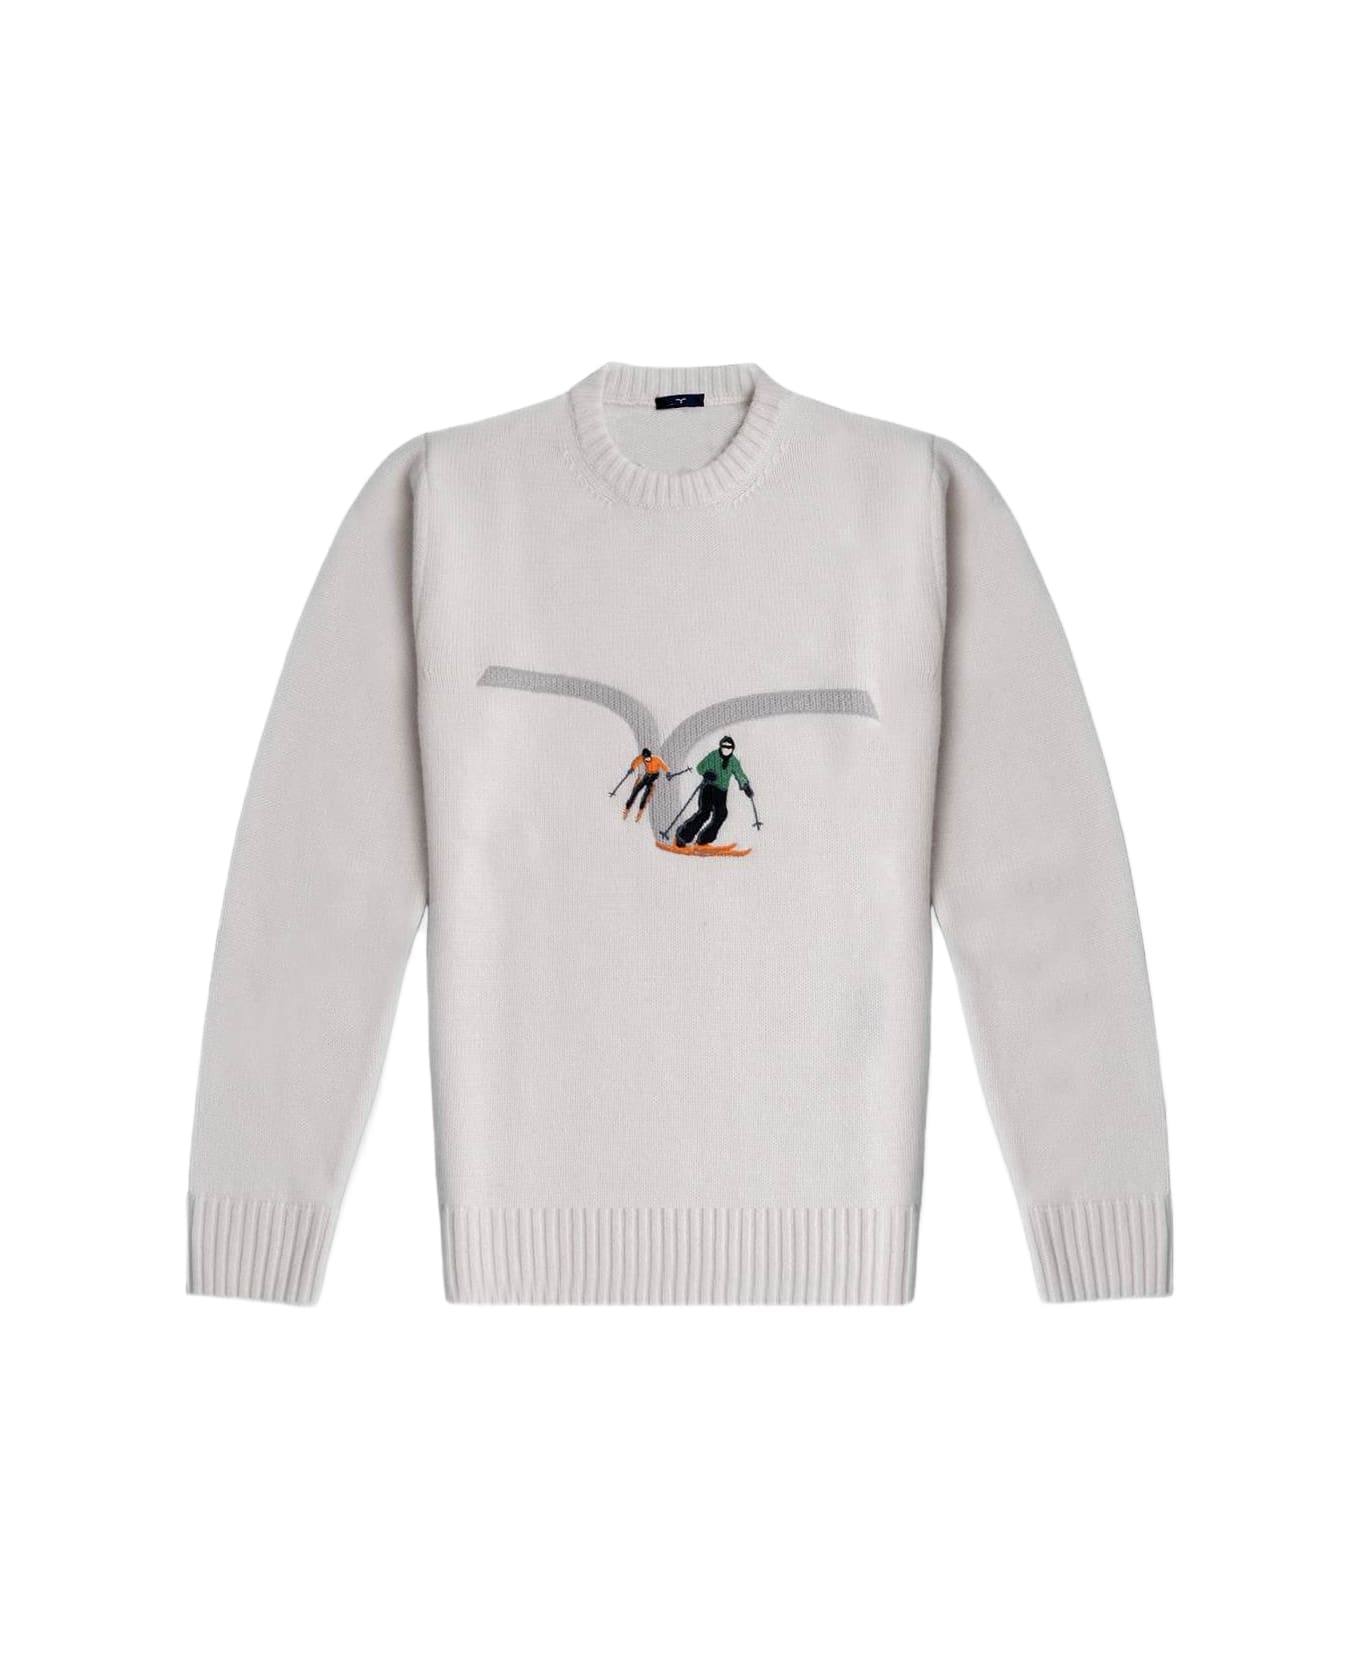 Larusmiani Sweater Ski Collection Sweater - Ivory